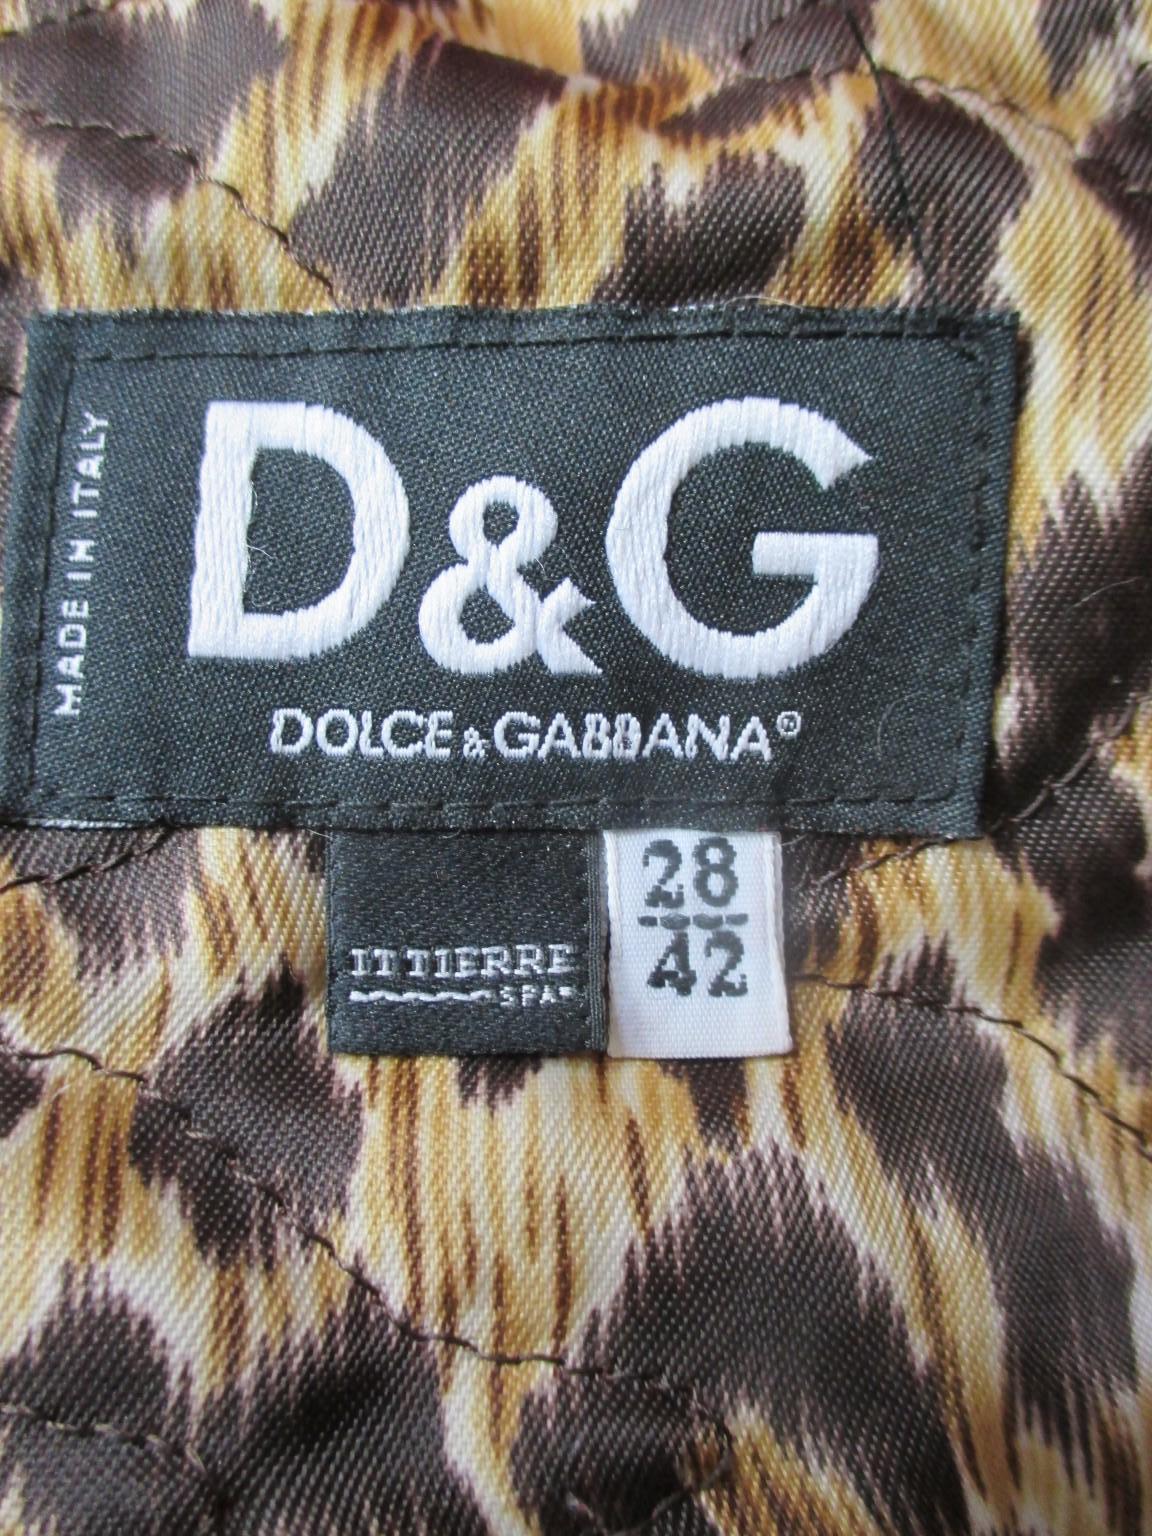 Dolce & Gabbana rock and roll 